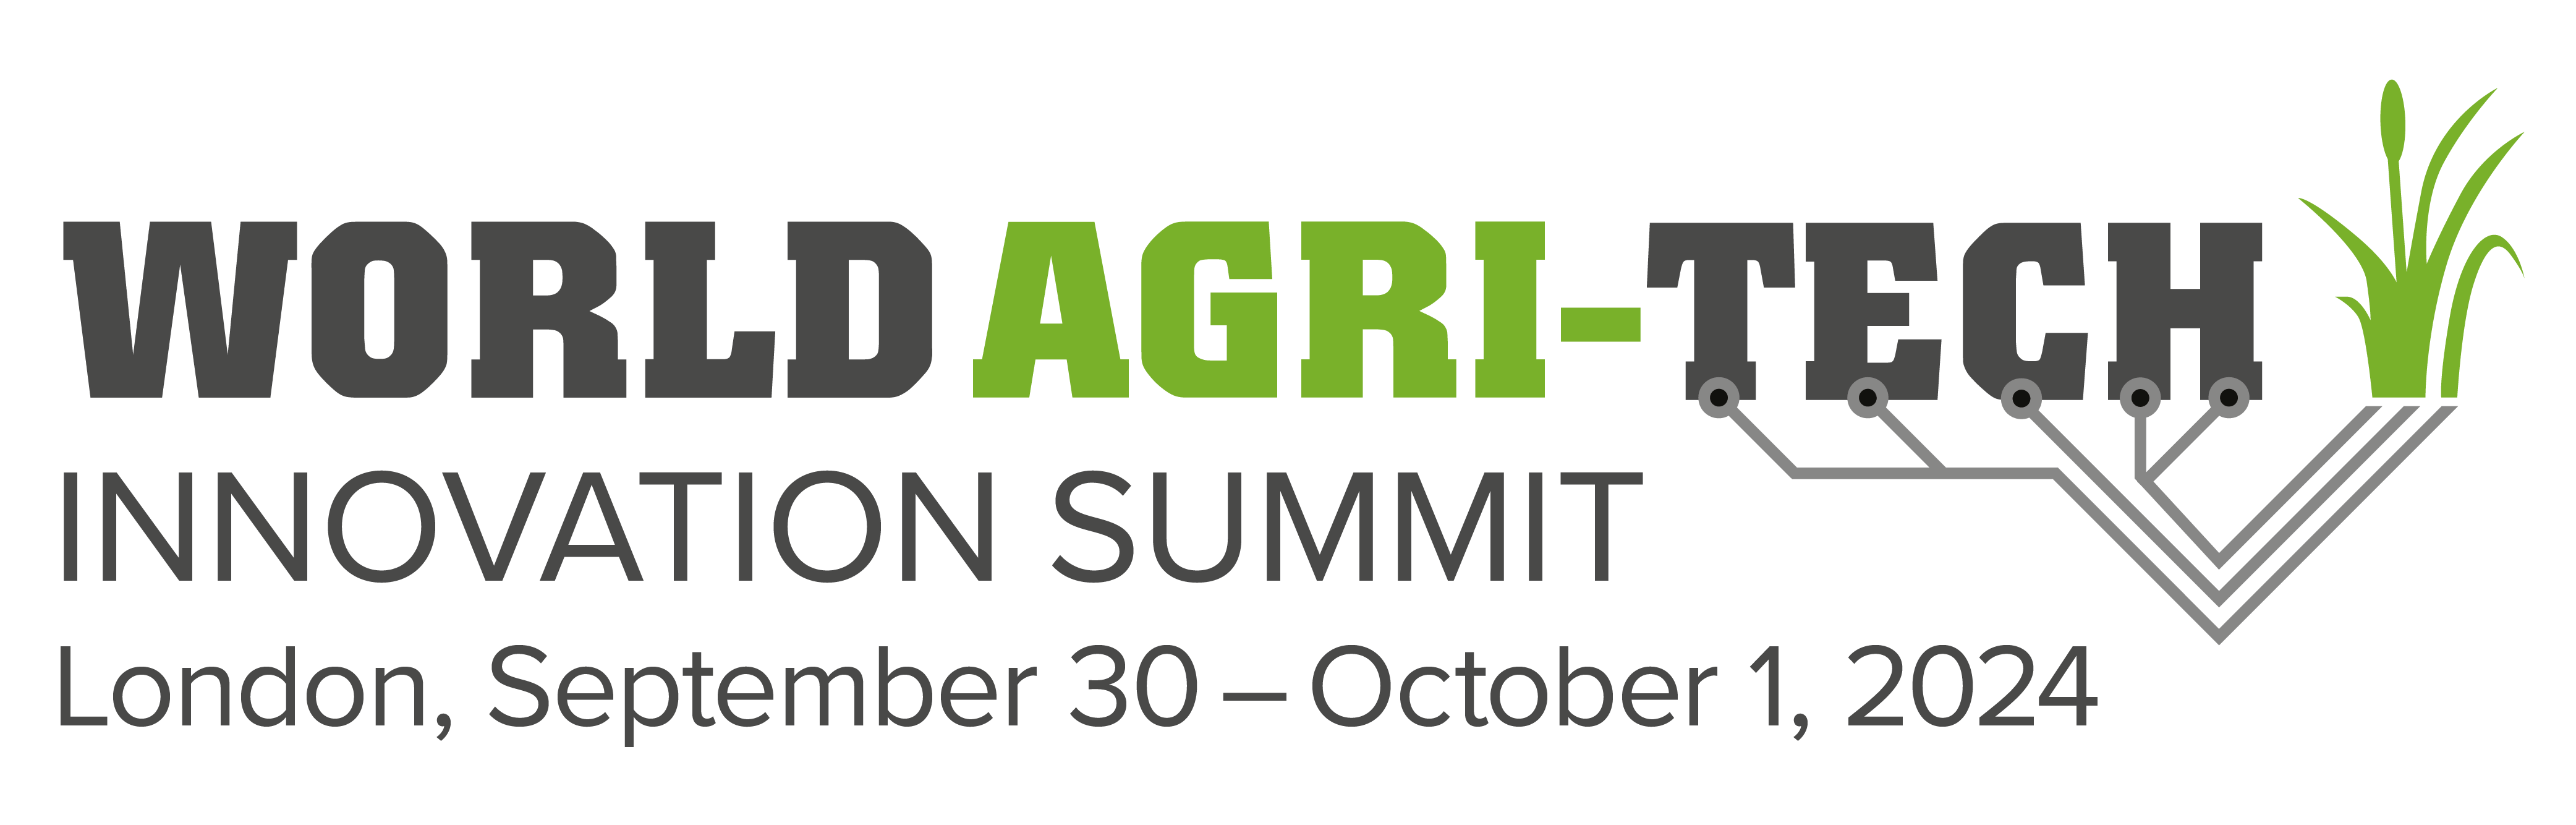 World Agri-Tech Innovation Summit London